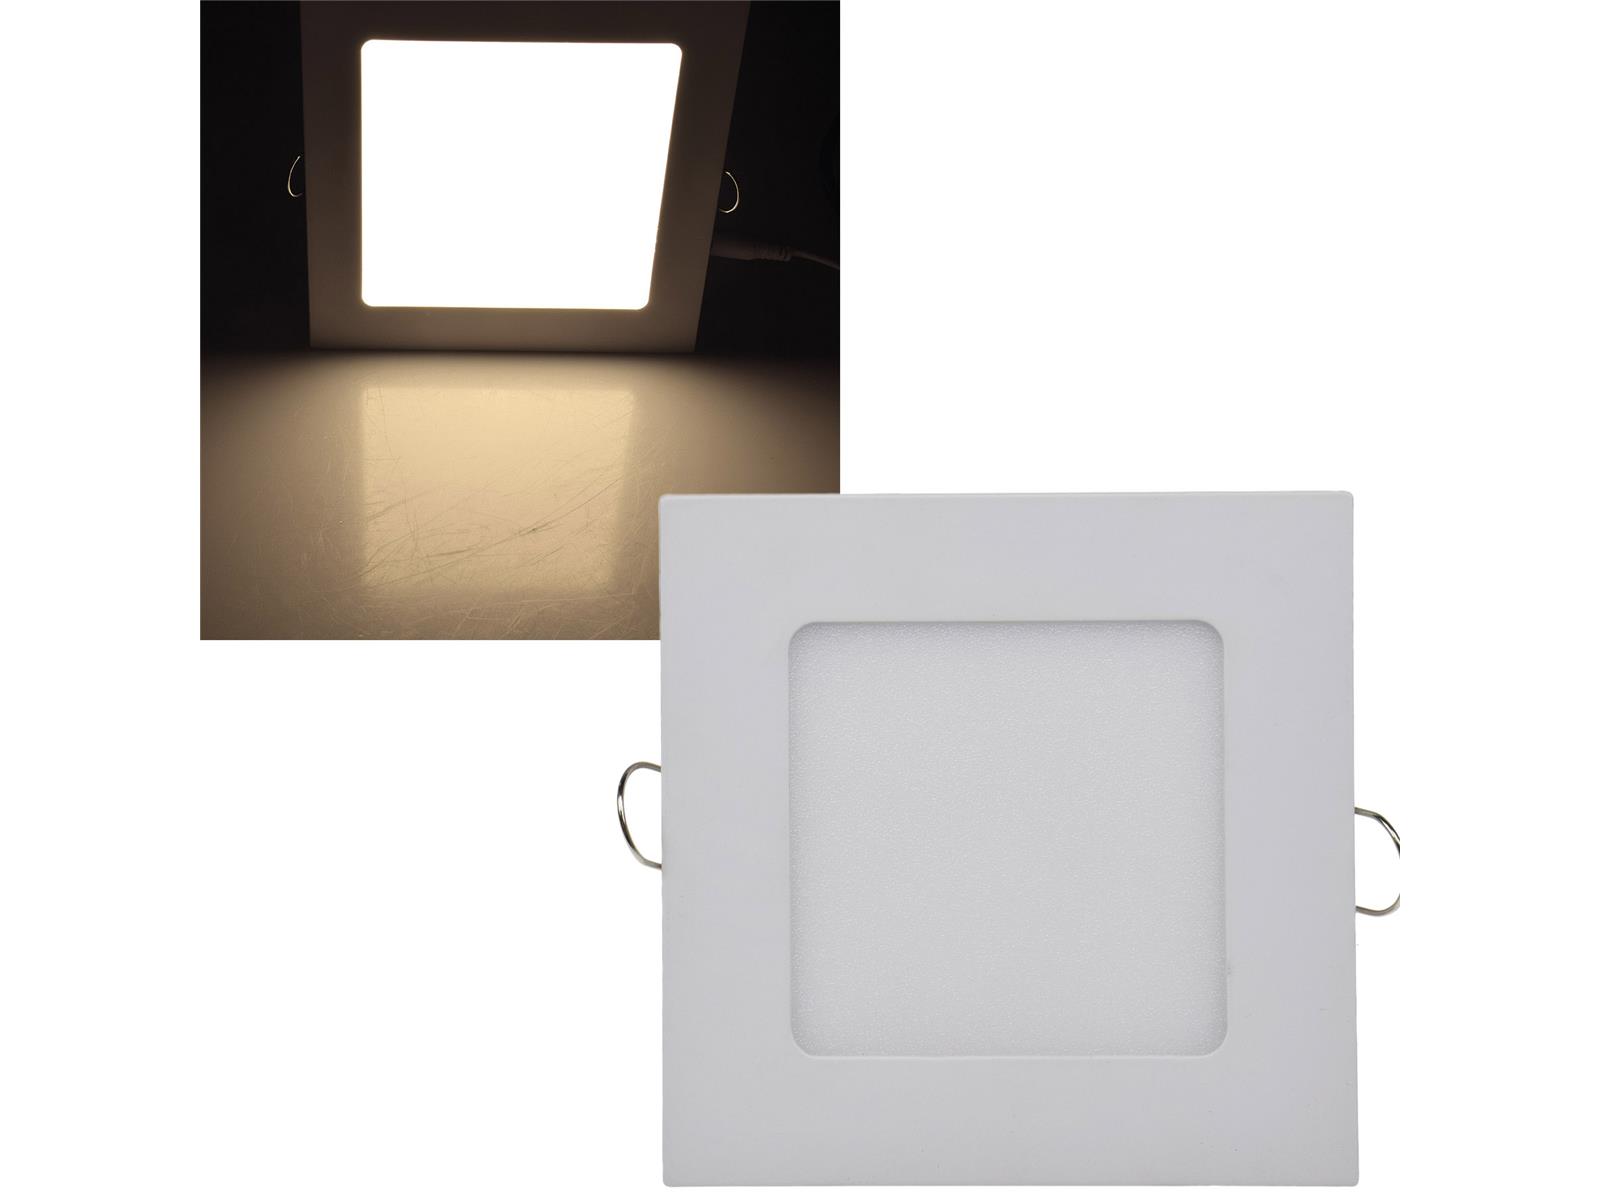 LED Licht-Panel "QCP-12Q", 12x12cm230V, 6W, 490 Lumen, 2900K / warmweiß